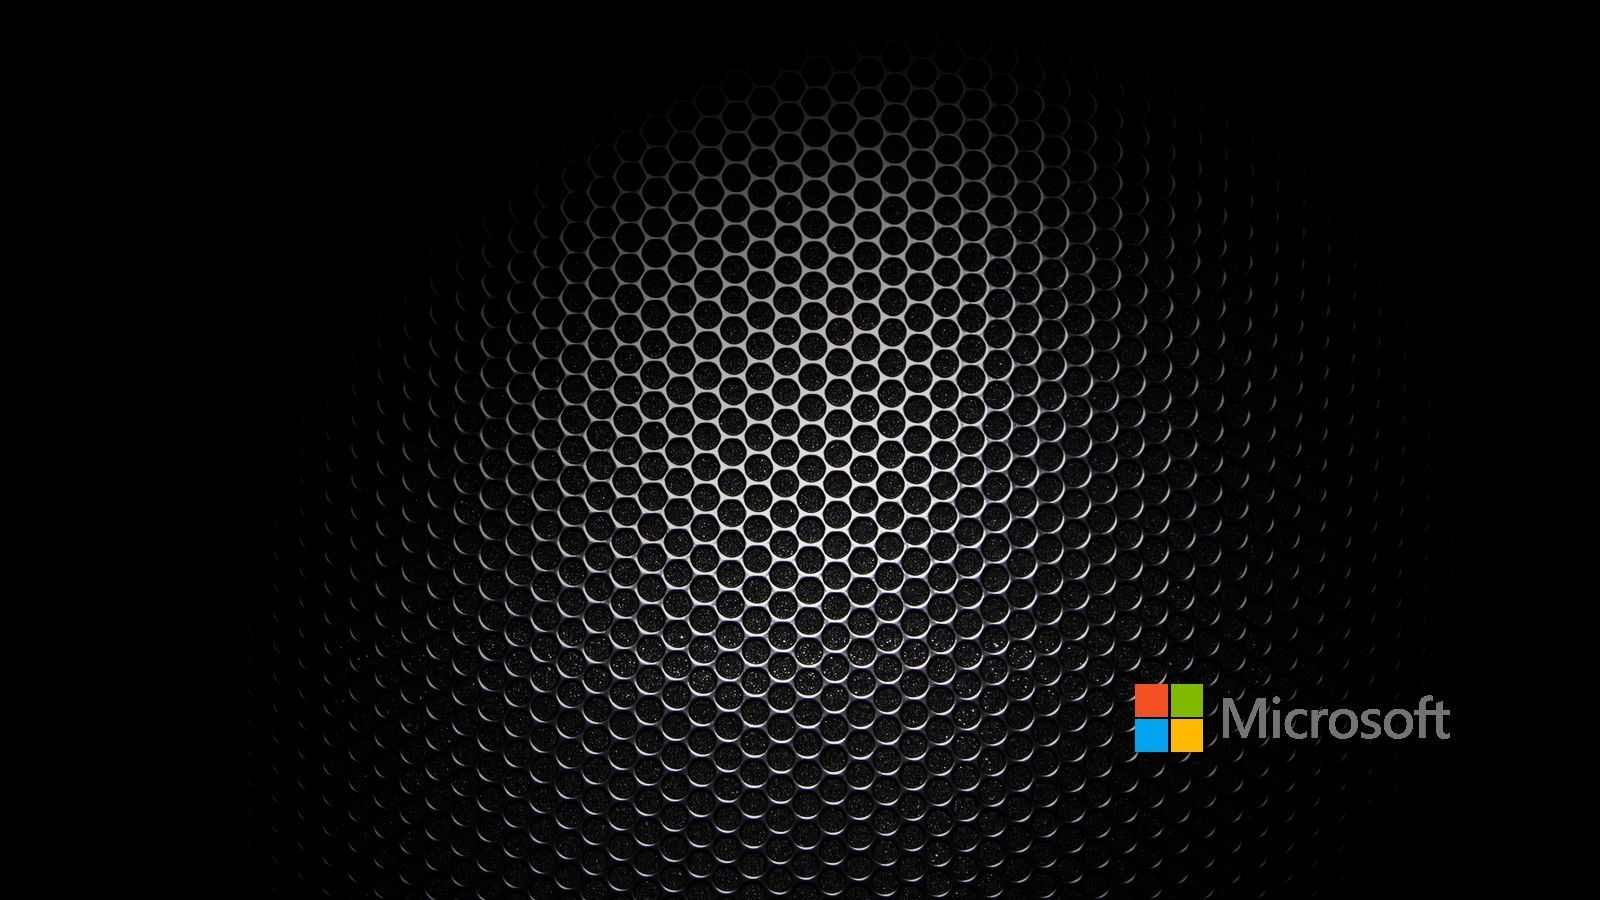 Microsoft Logo Wallpaper 2013. Microsoft wallpaper, Carbon fiber